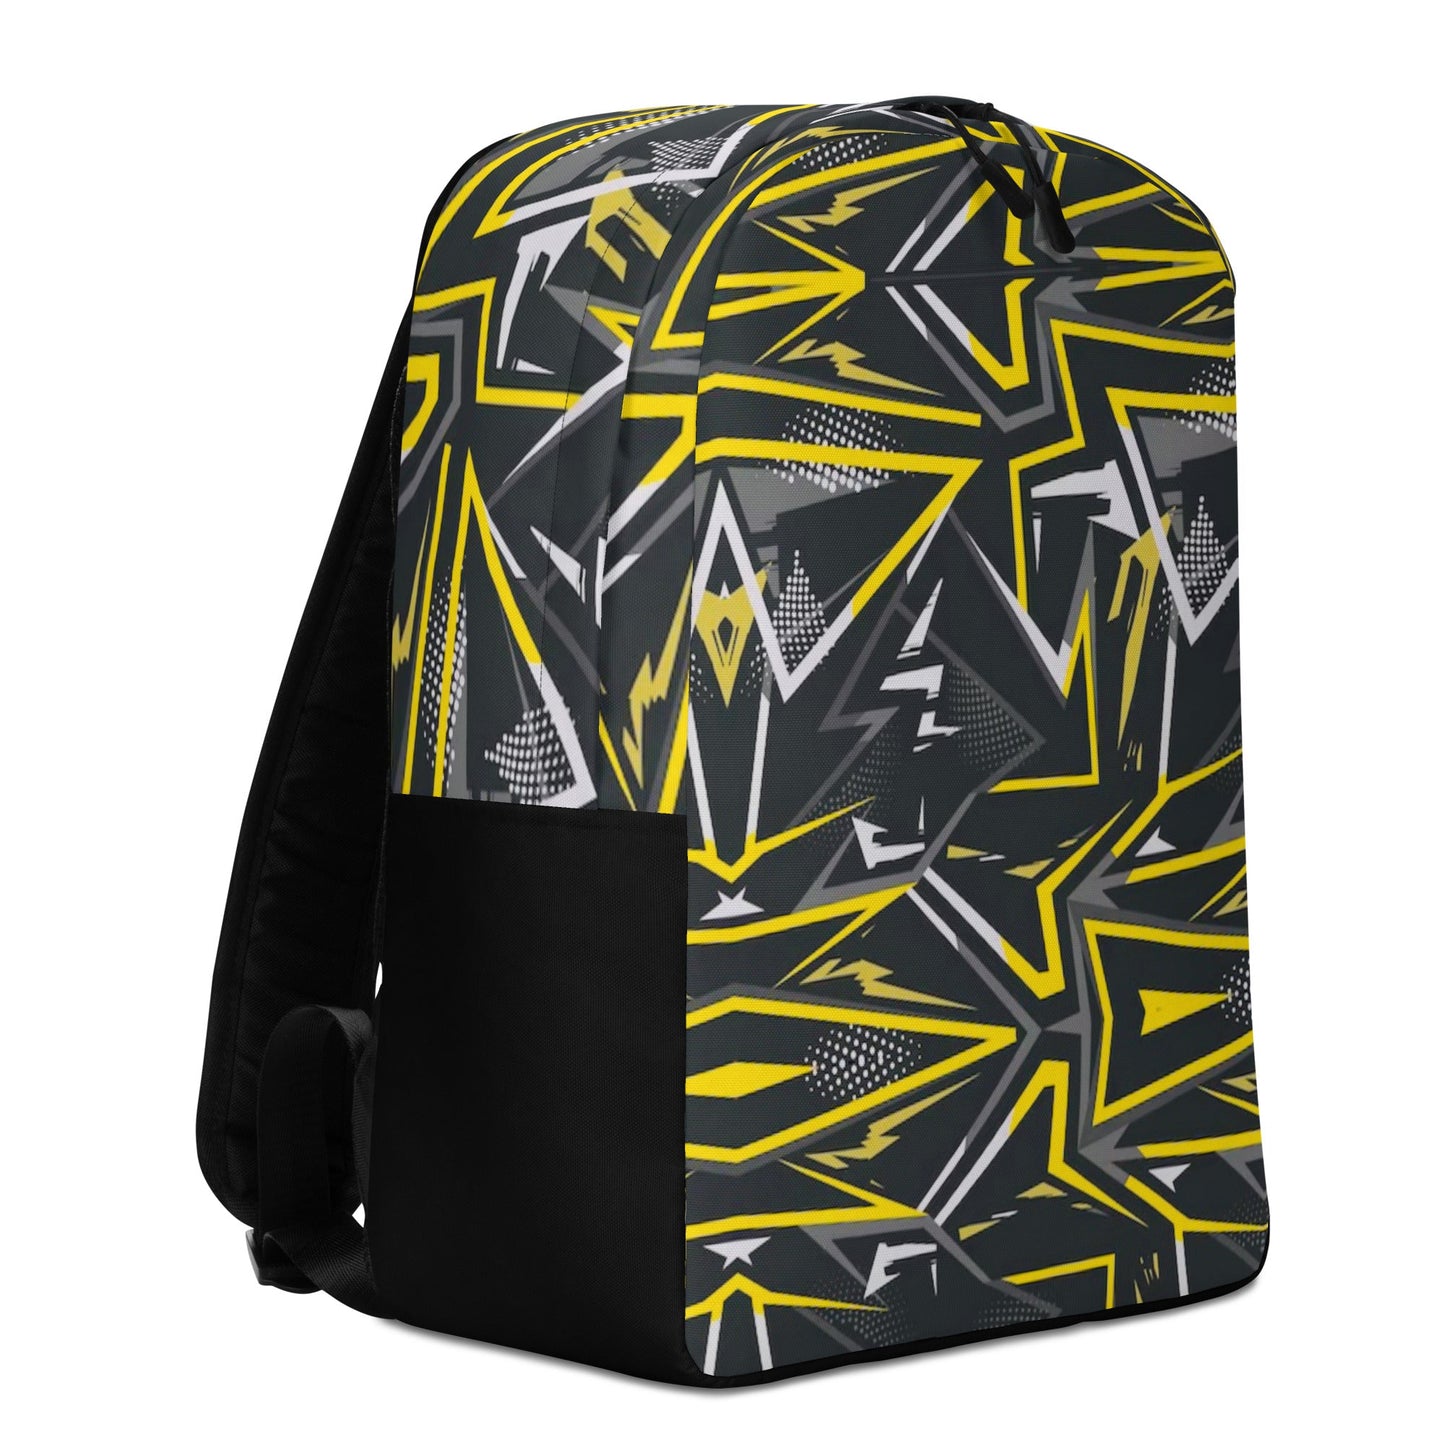 Craftklart (AOP) Minimalist Backpack - Premium Backpack from Craftklart - Just $34.99! Shop now at Craftklart.store